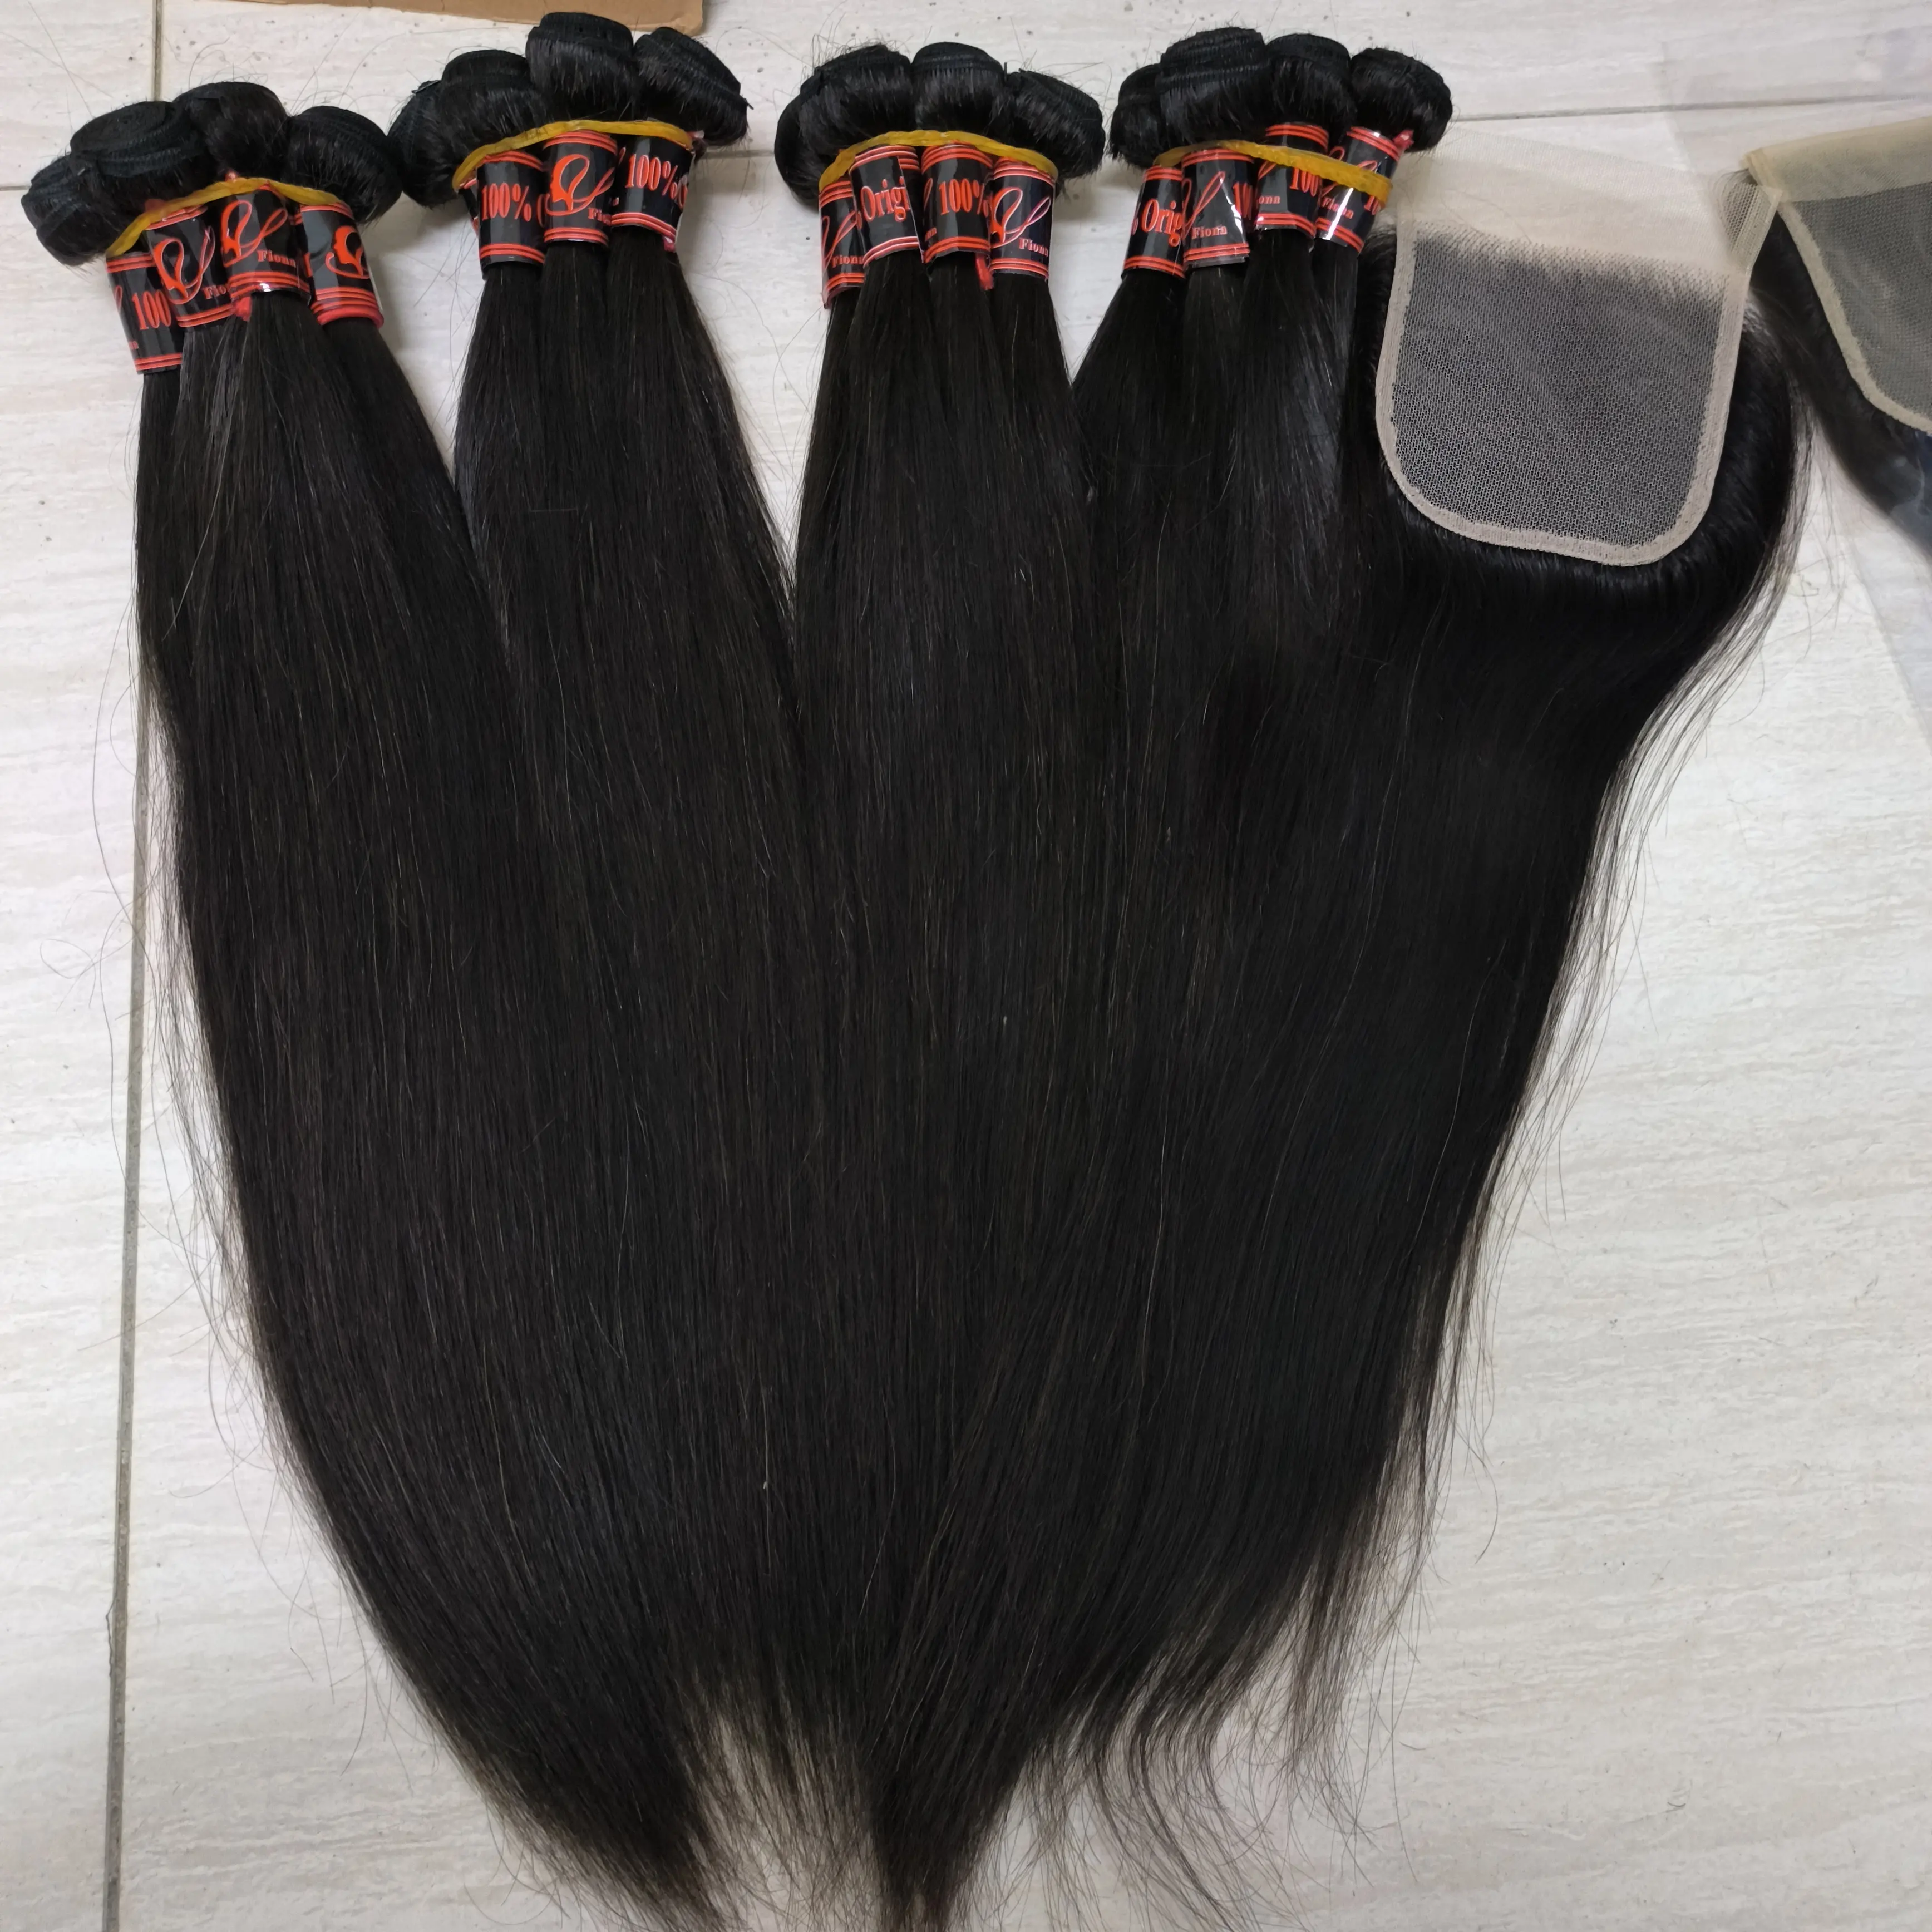 लेट्सफ्लाई थोक सीधे बाल 18 इंच 100% मानव बाल बंडल स्टॉक में 9 ए ग्रेड प्राकृतिक रंग ब्राजीलियाई कुंवारी बाल एक्सटेंशन